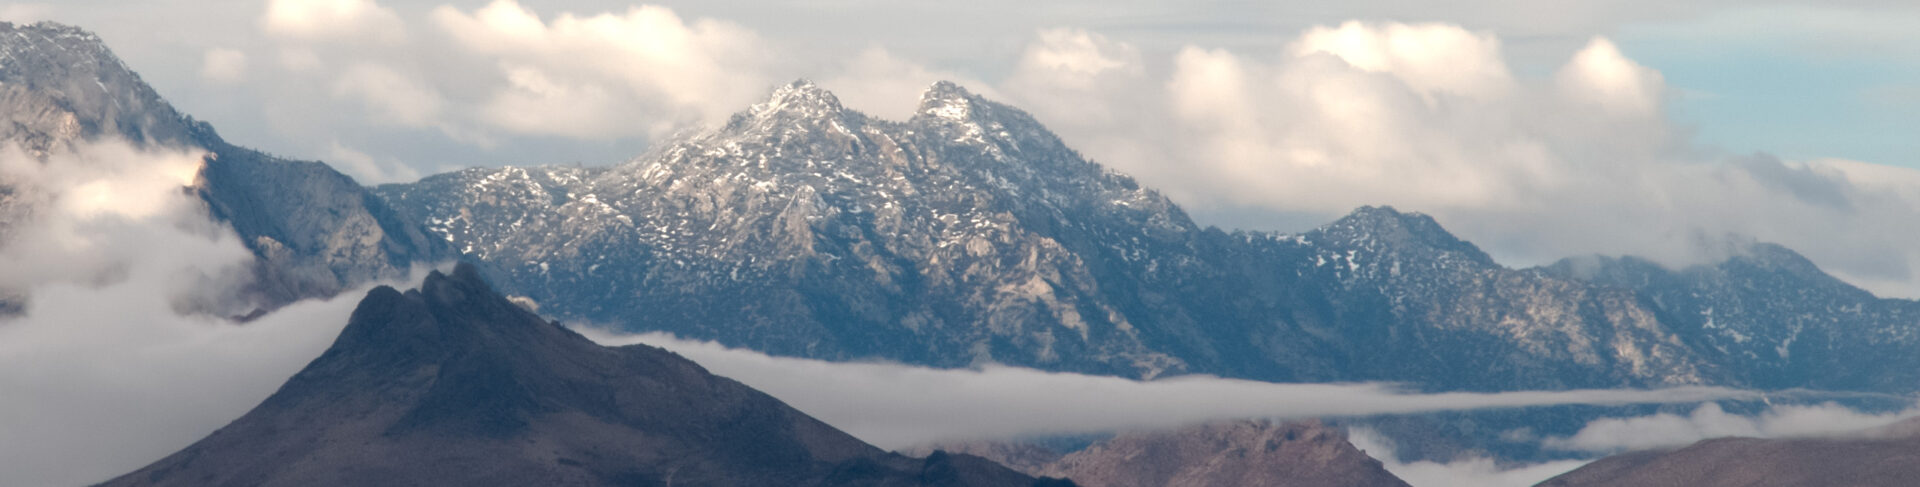 Winter in the Sierra Nevada Mountains above Ridgecrest, CA by Cheryl McDonald